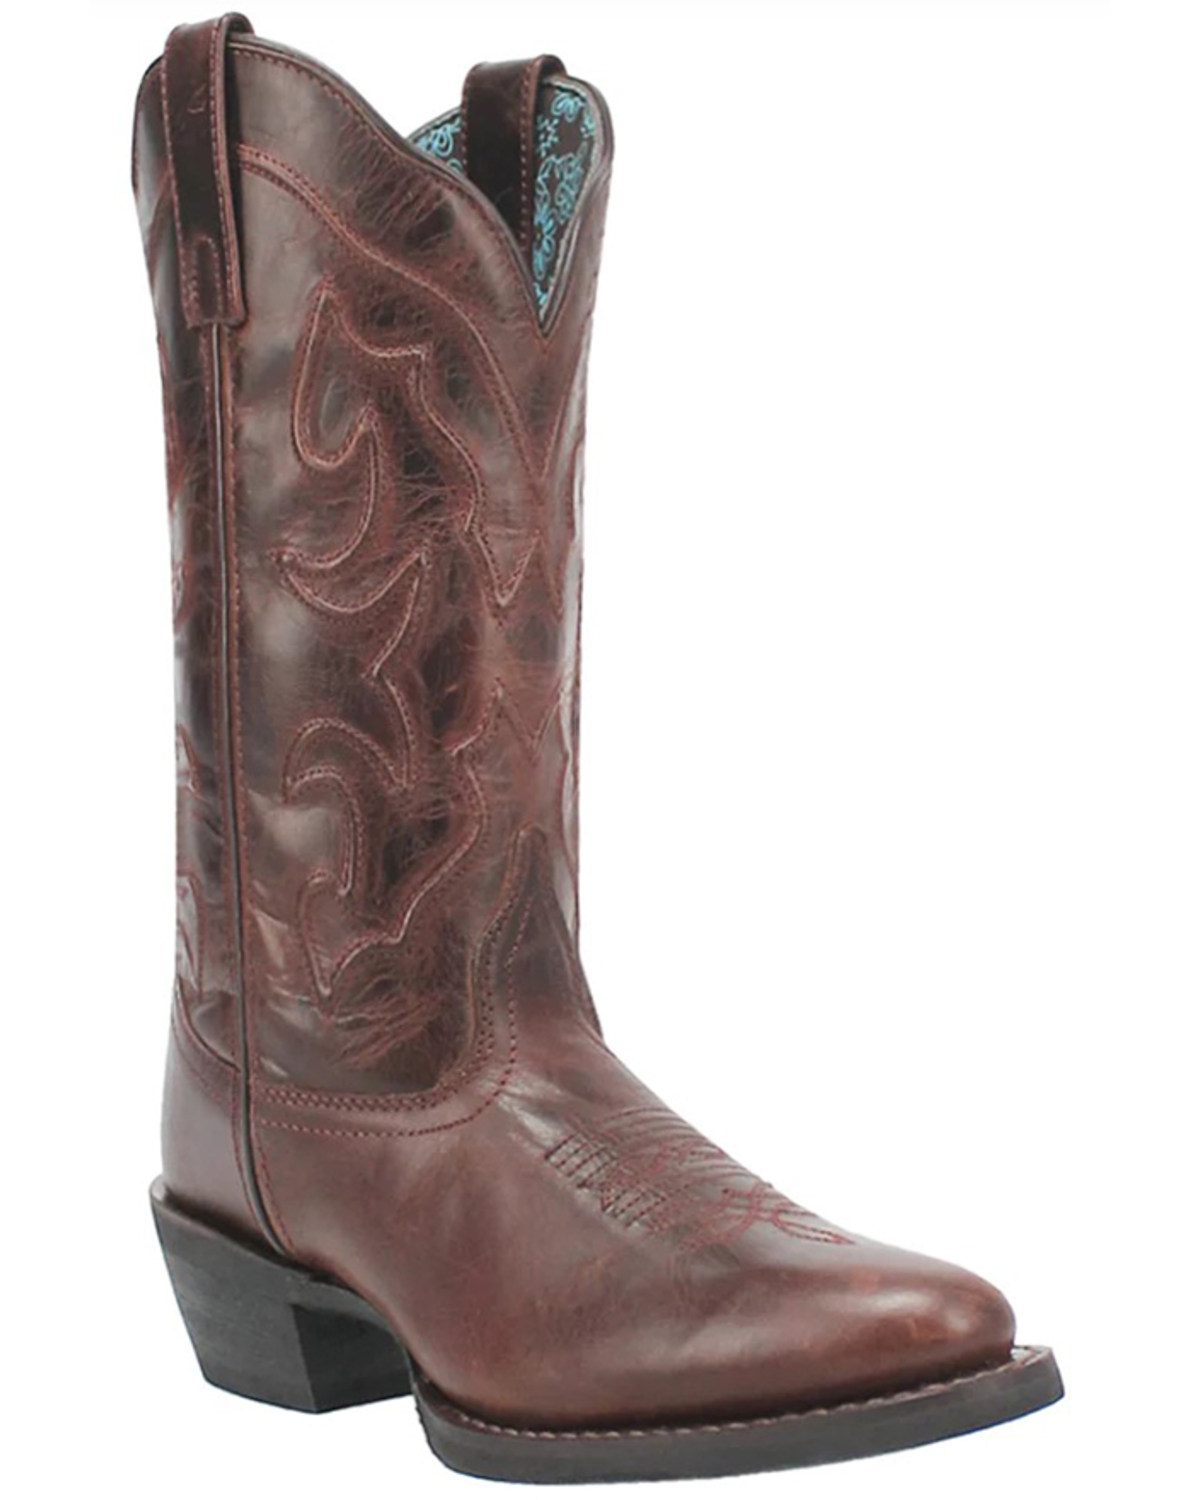 Laredo Women's Shelley Western Boots - Medium Toe